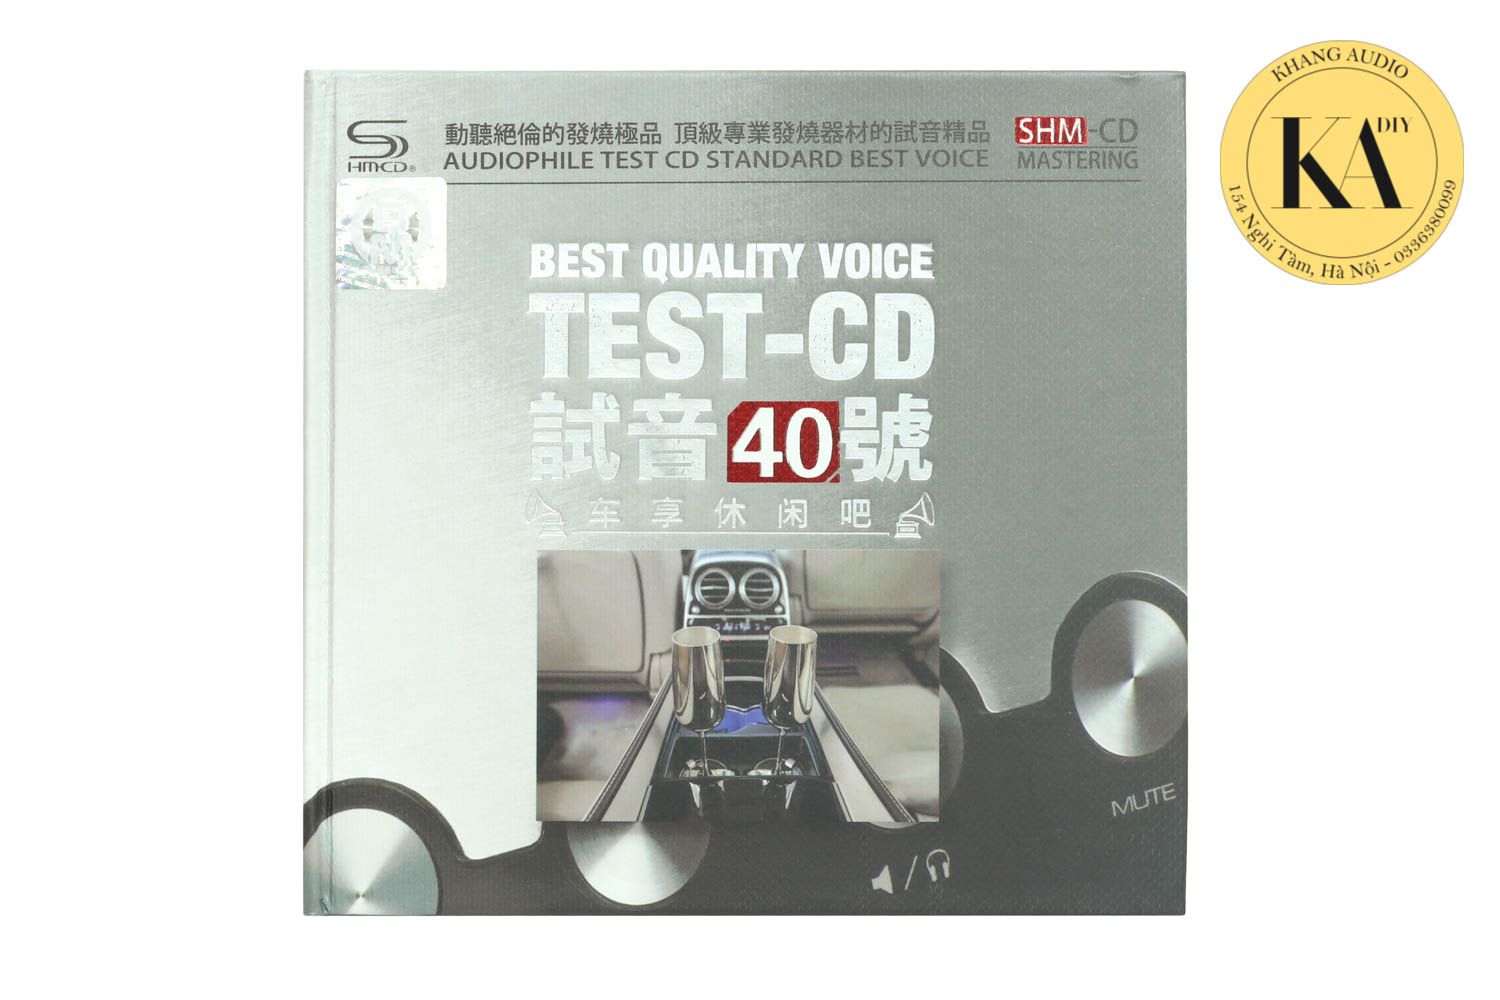 Test CD No.40 Khang Audio 0336380099